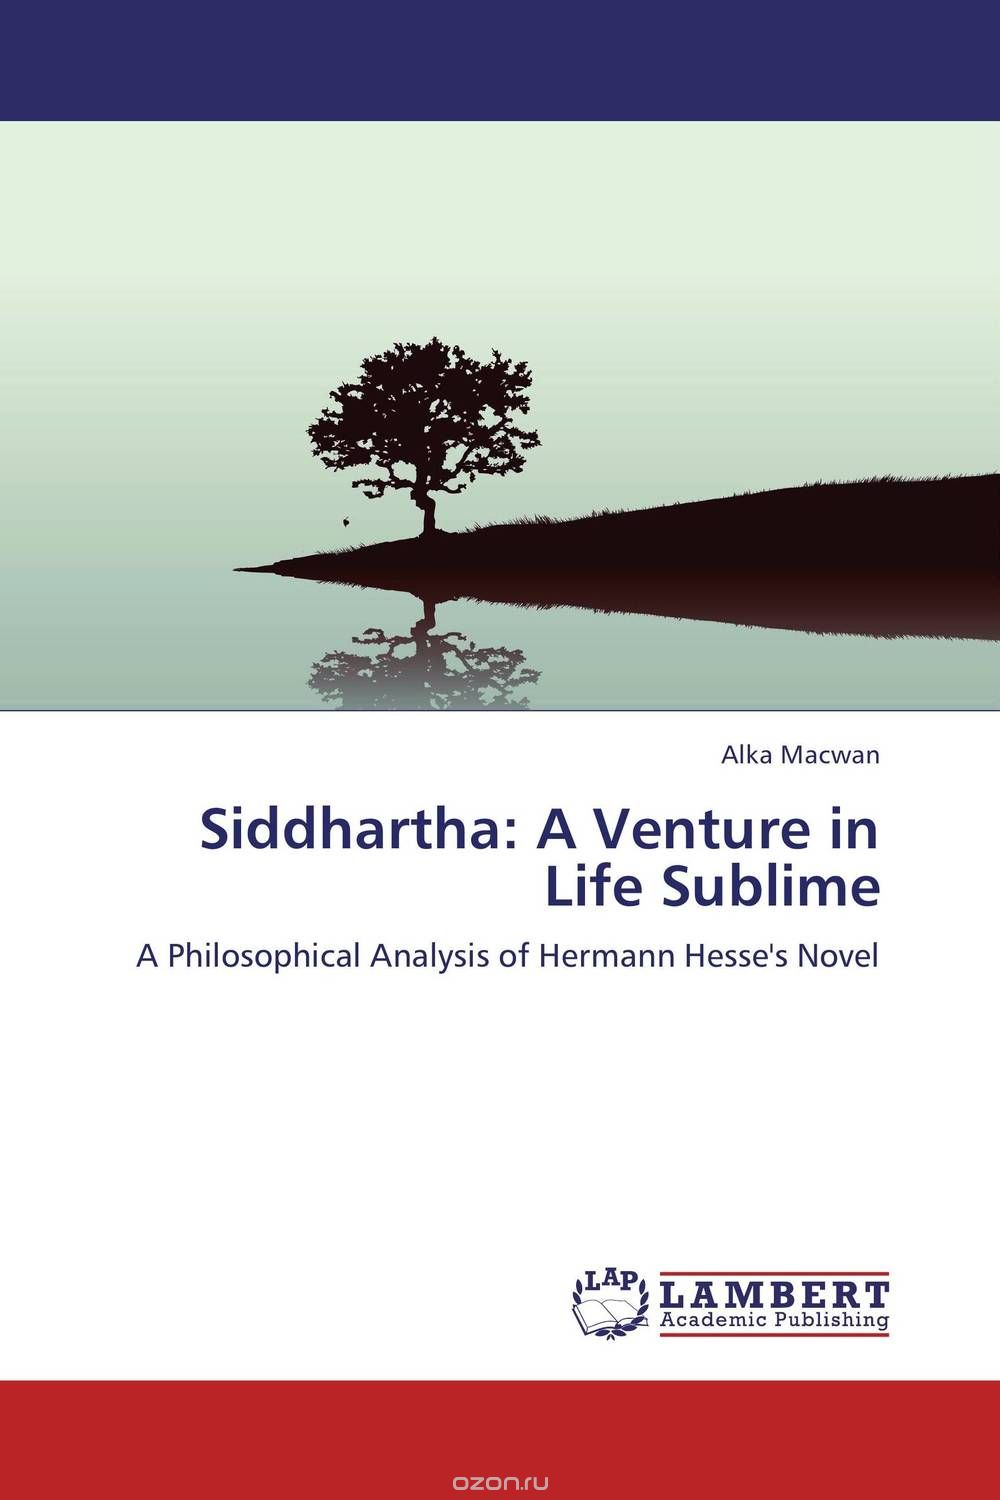 Скачать книгу "Siddhartha: A  Venture in Life Sublime"